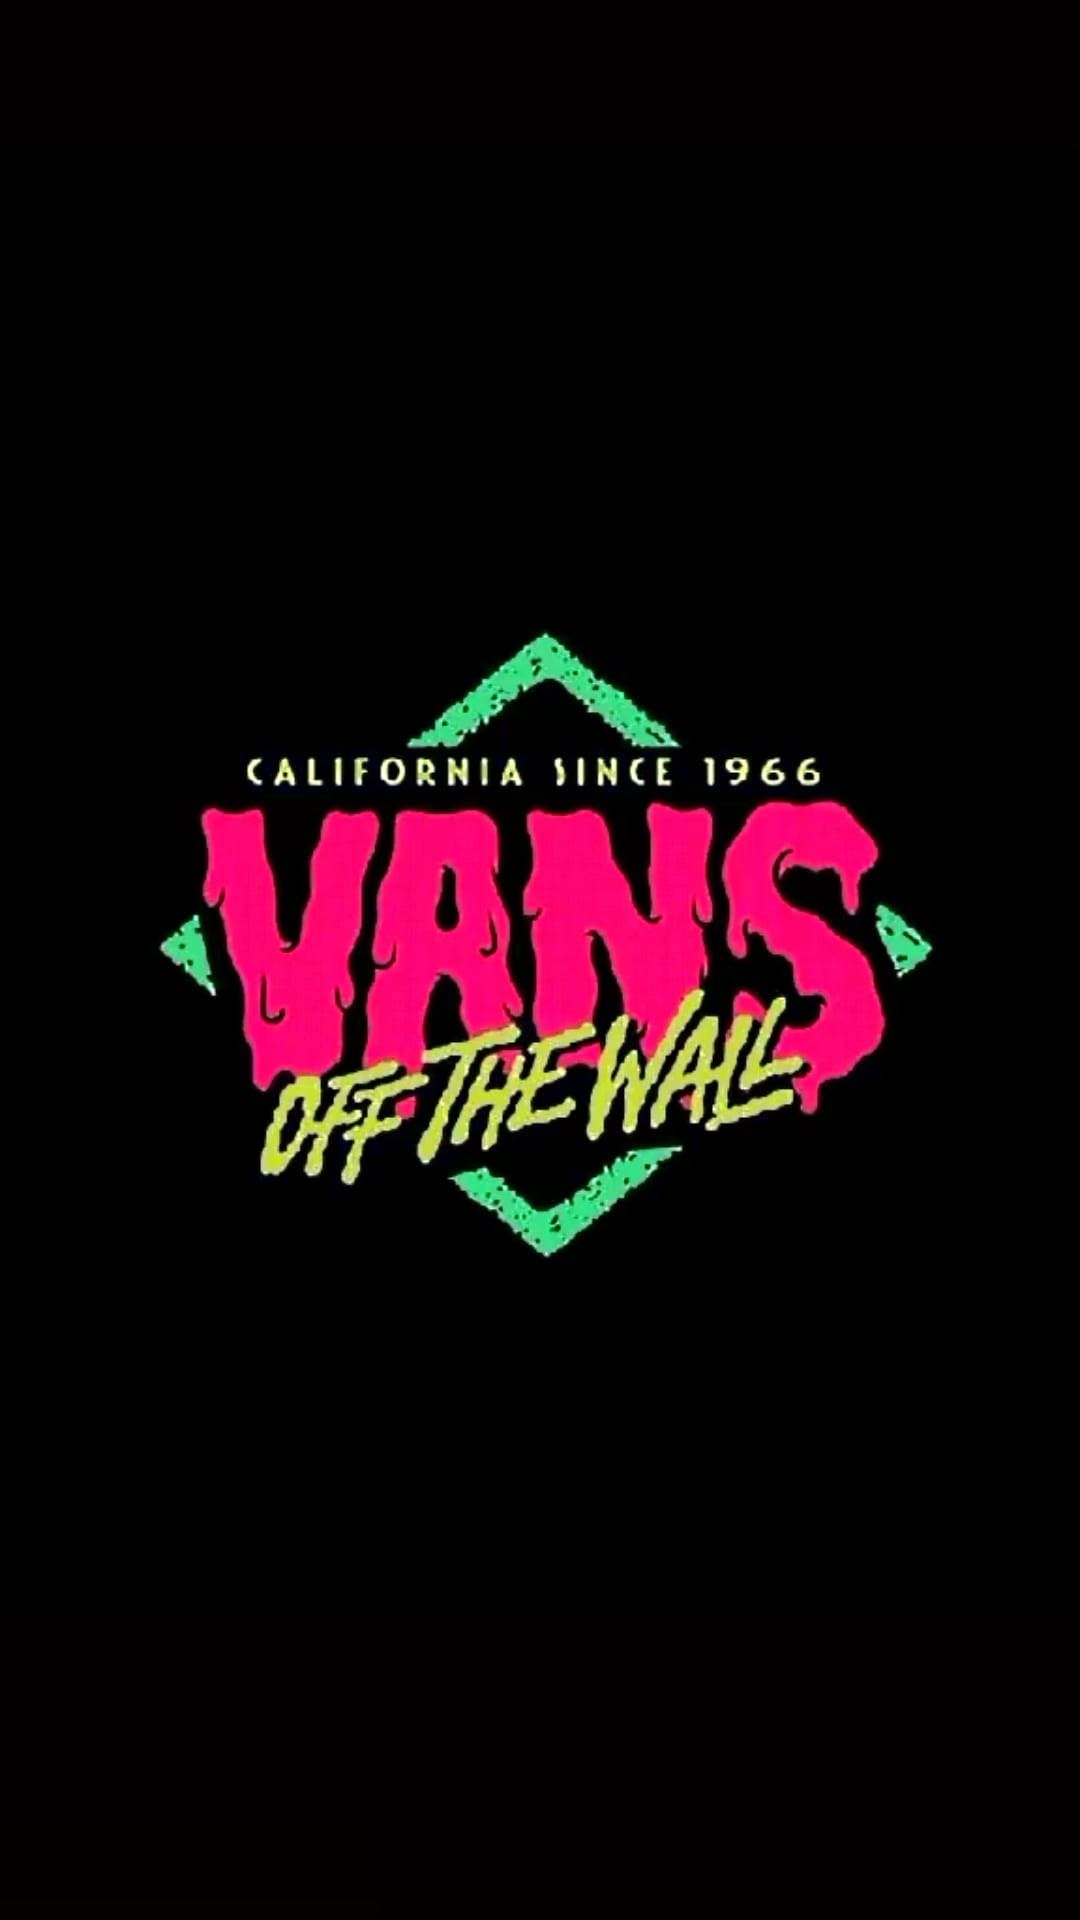 Free Vans Logo Wallpaper Downloads, Vans Logo Wallpaper for FREE